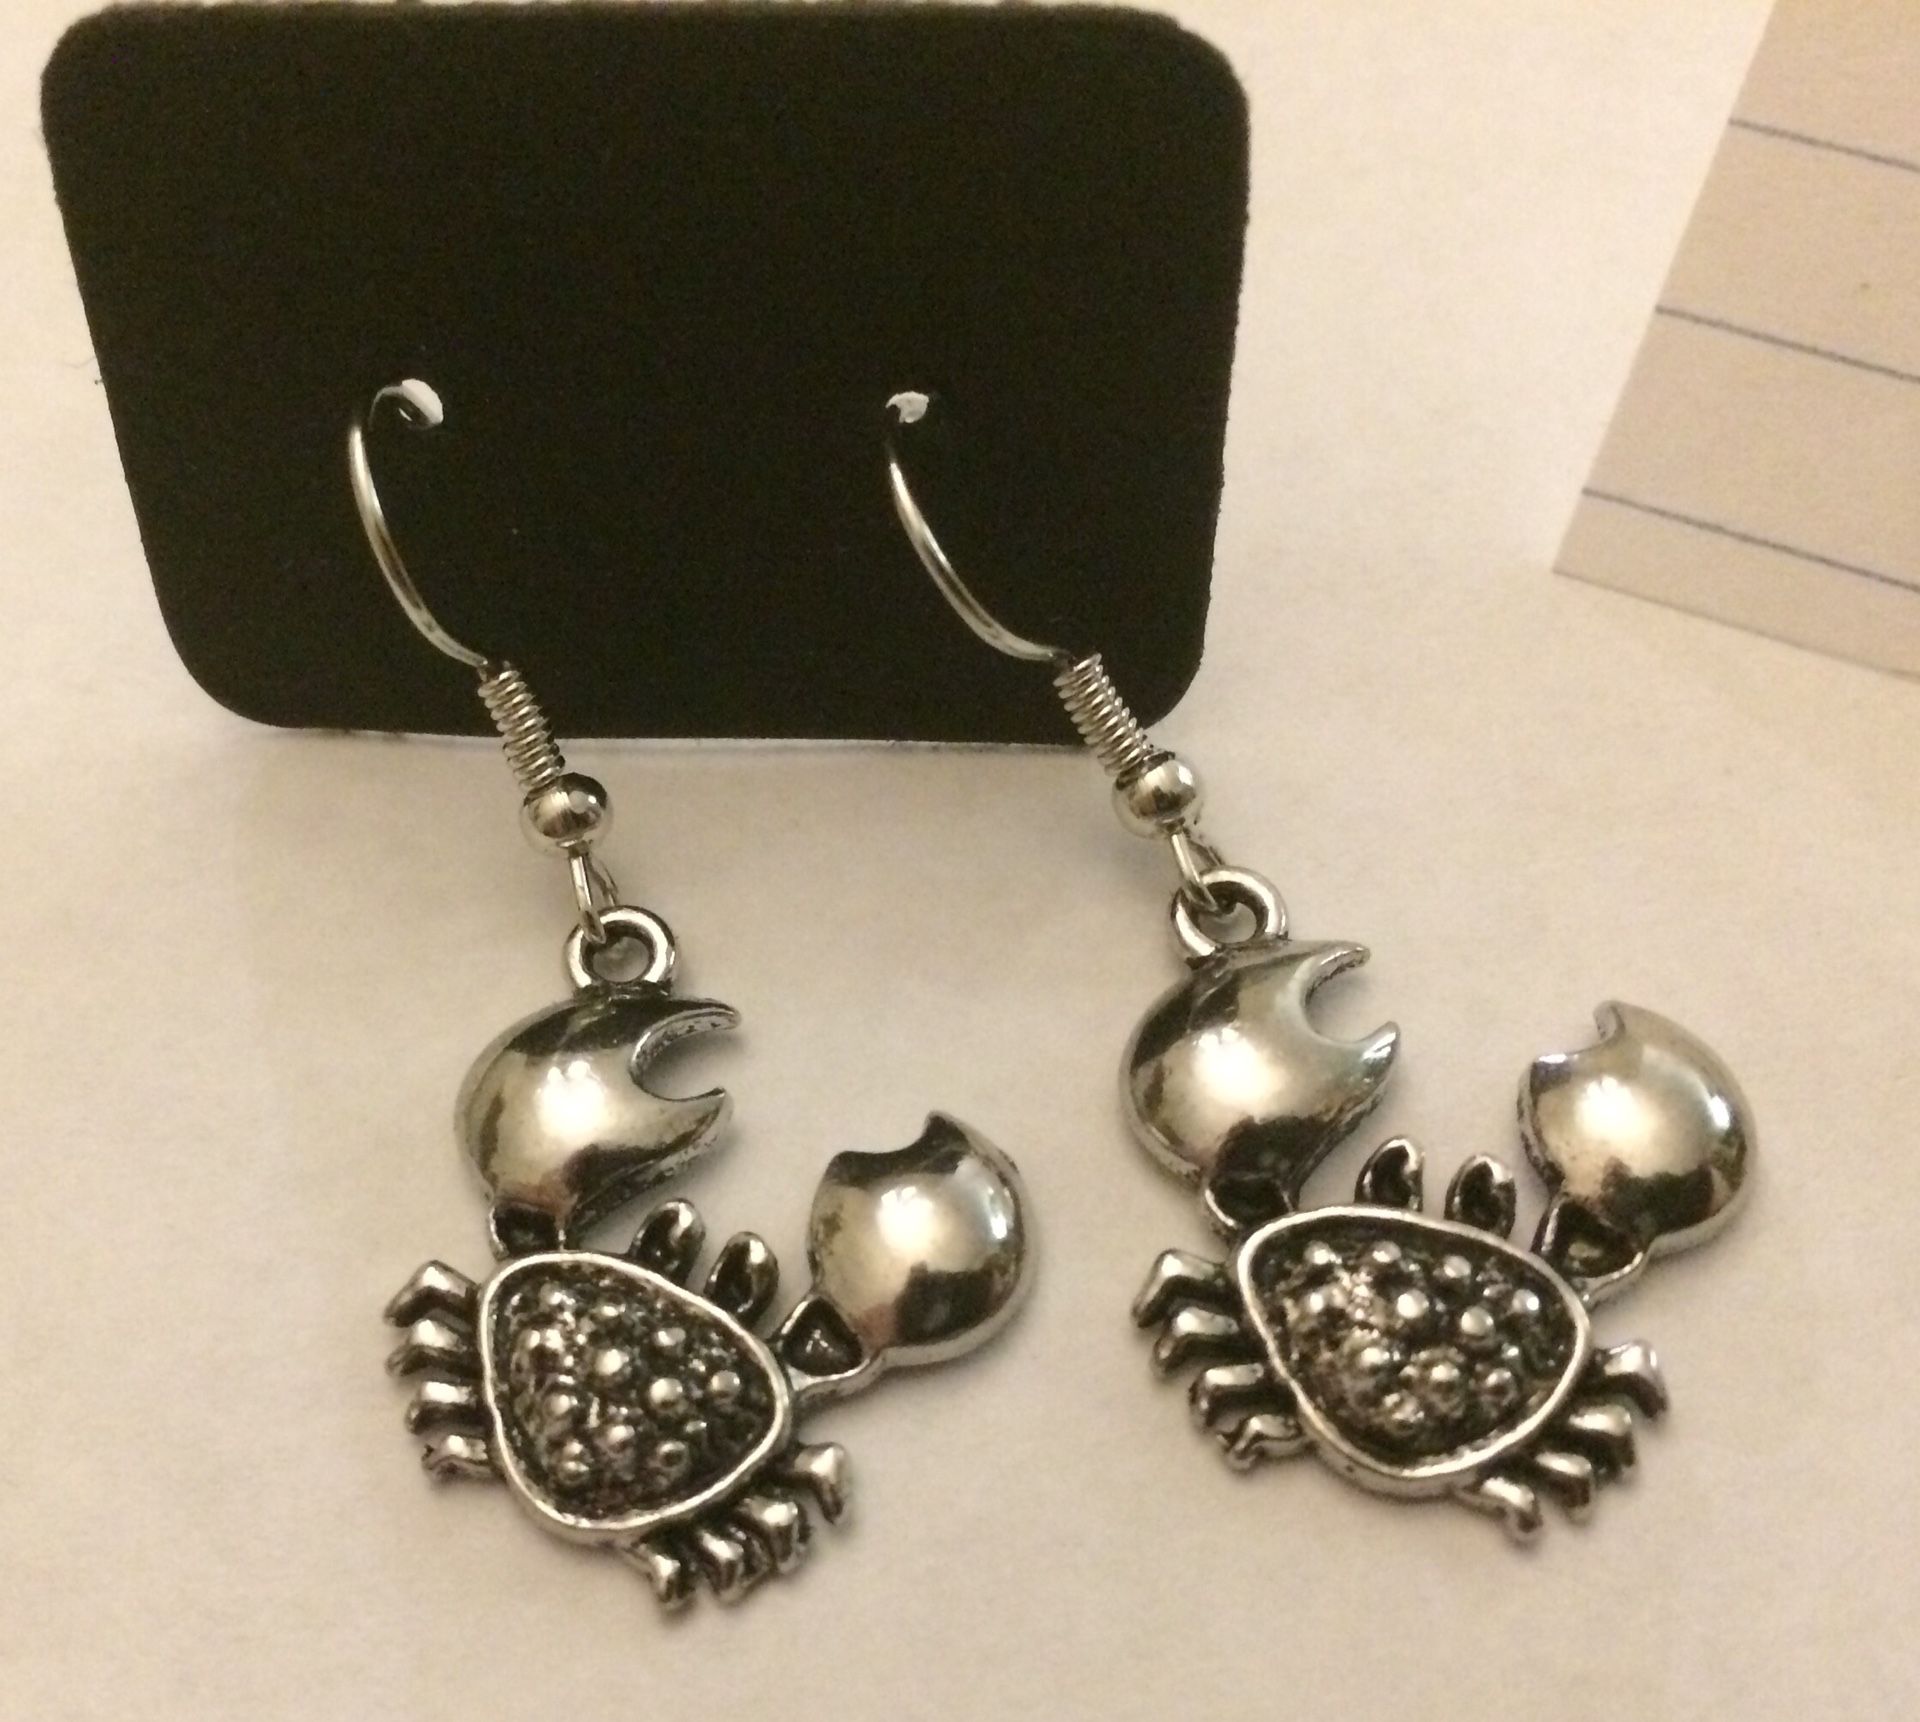 Sea life earrings $4 a pair